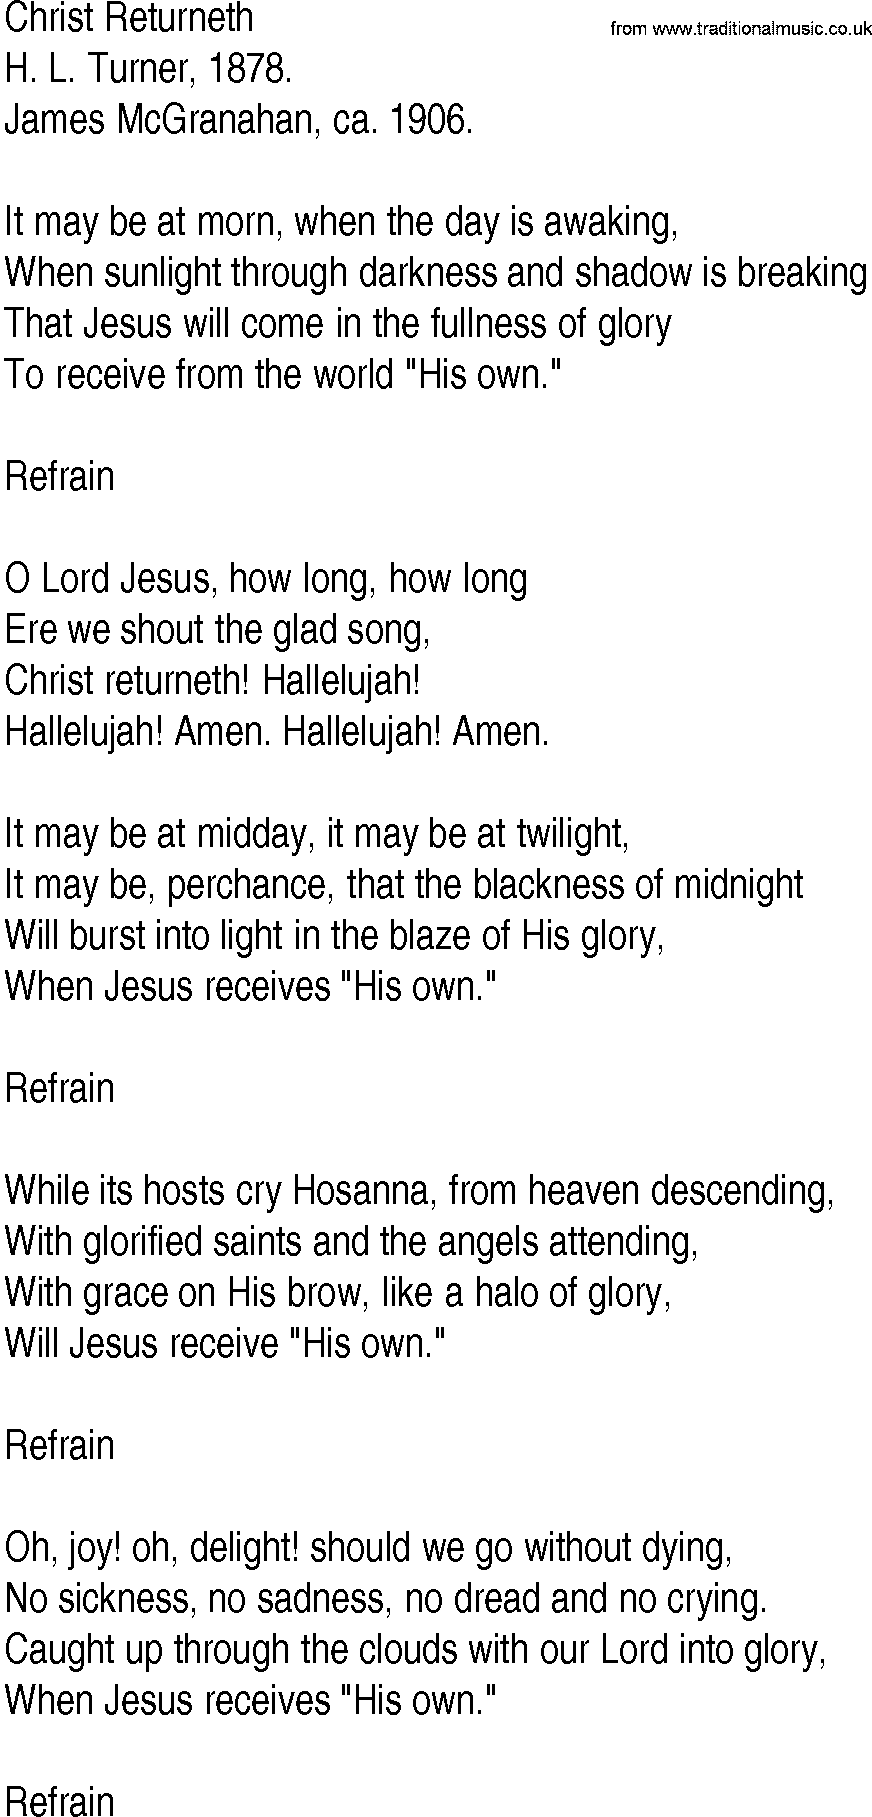 Hymn and Gospel Song: Christ Returneth by H L Turner lyrics